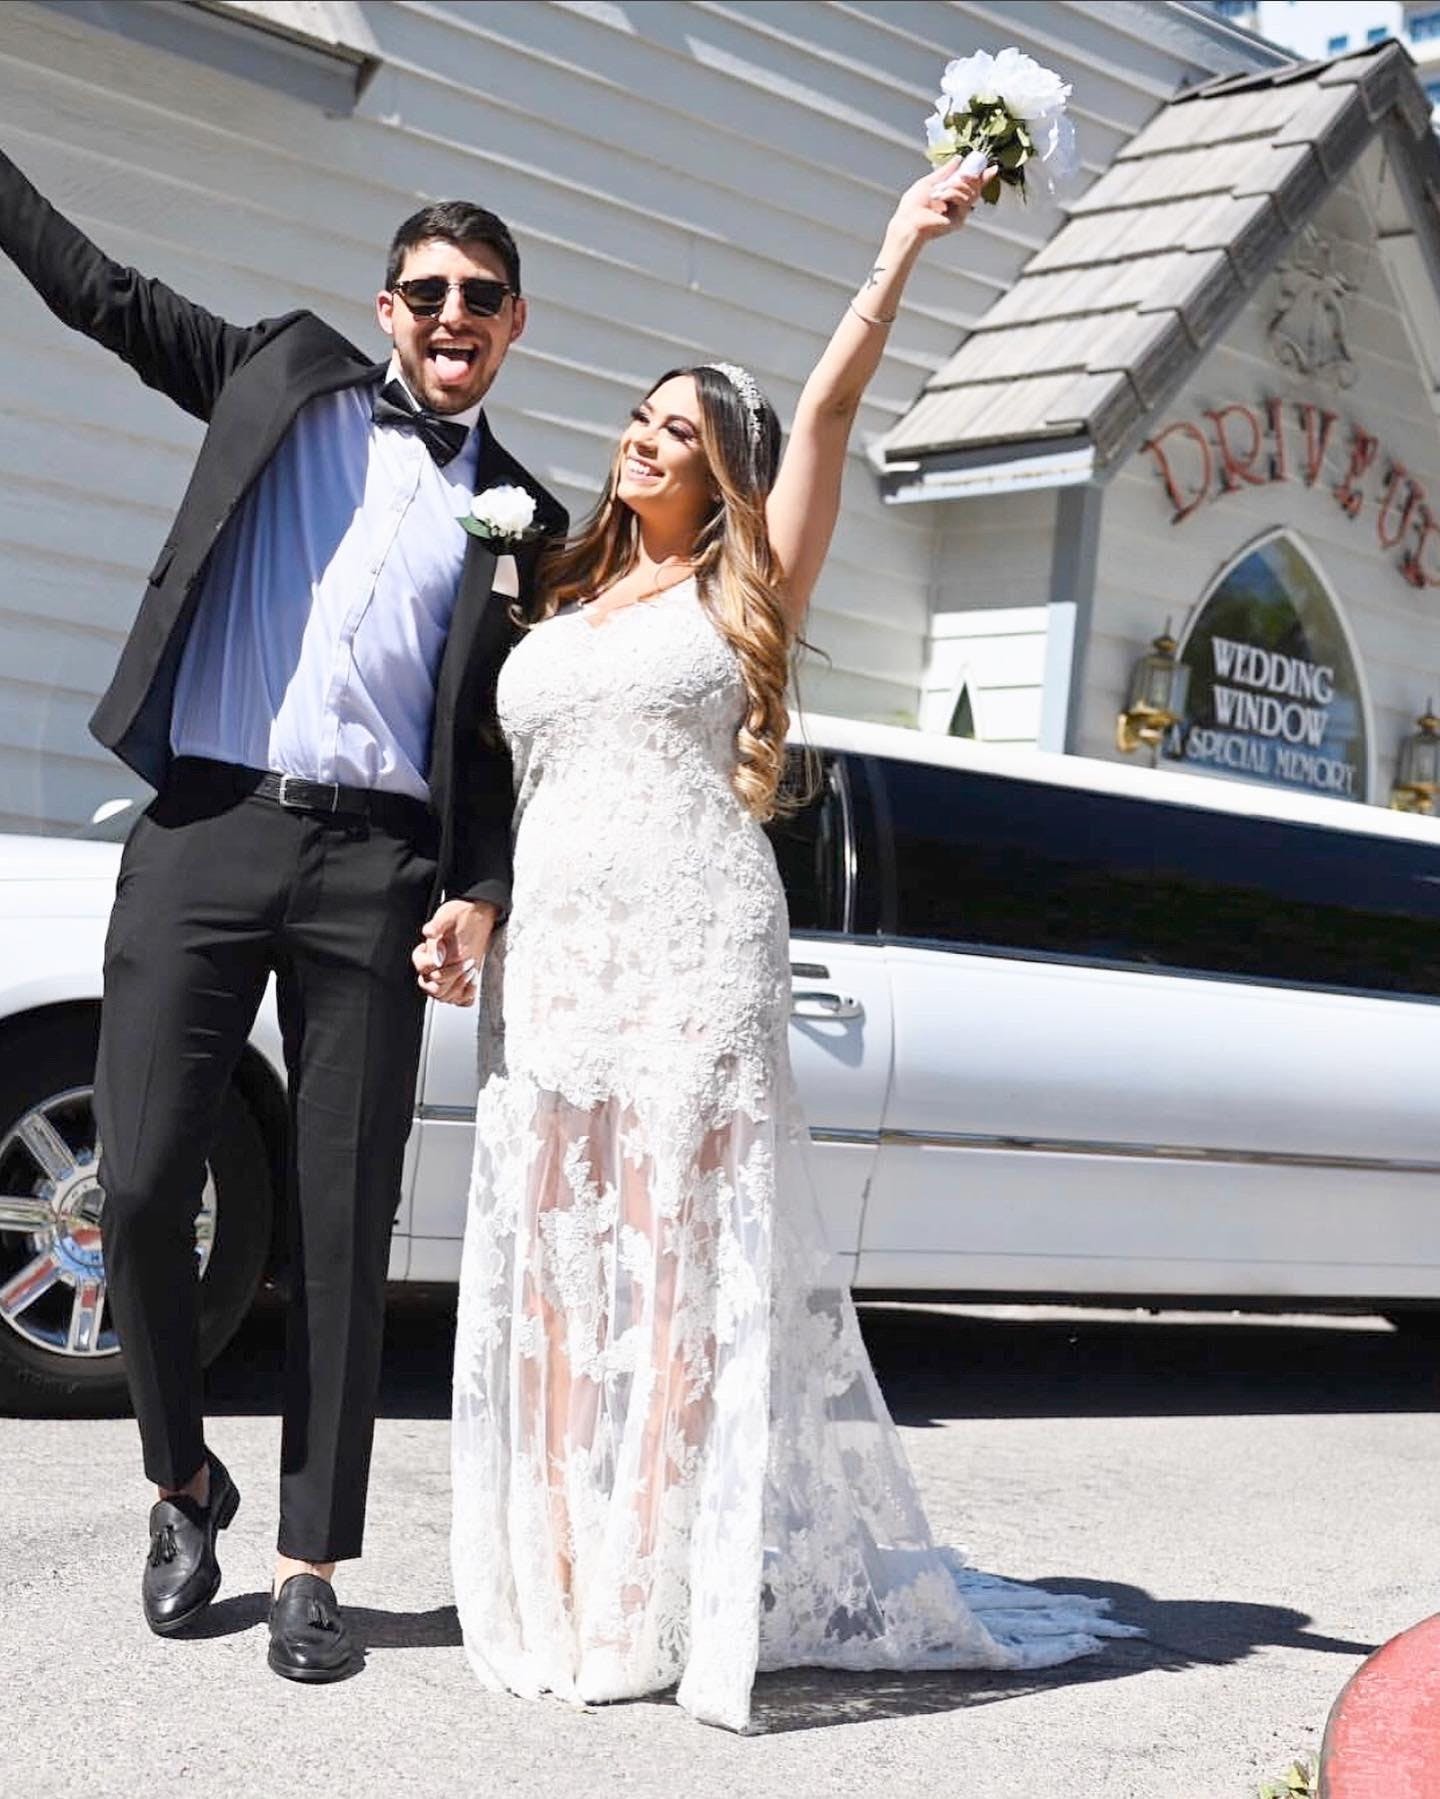 Las Vegas 'Super Sized' drive-thru wedding package